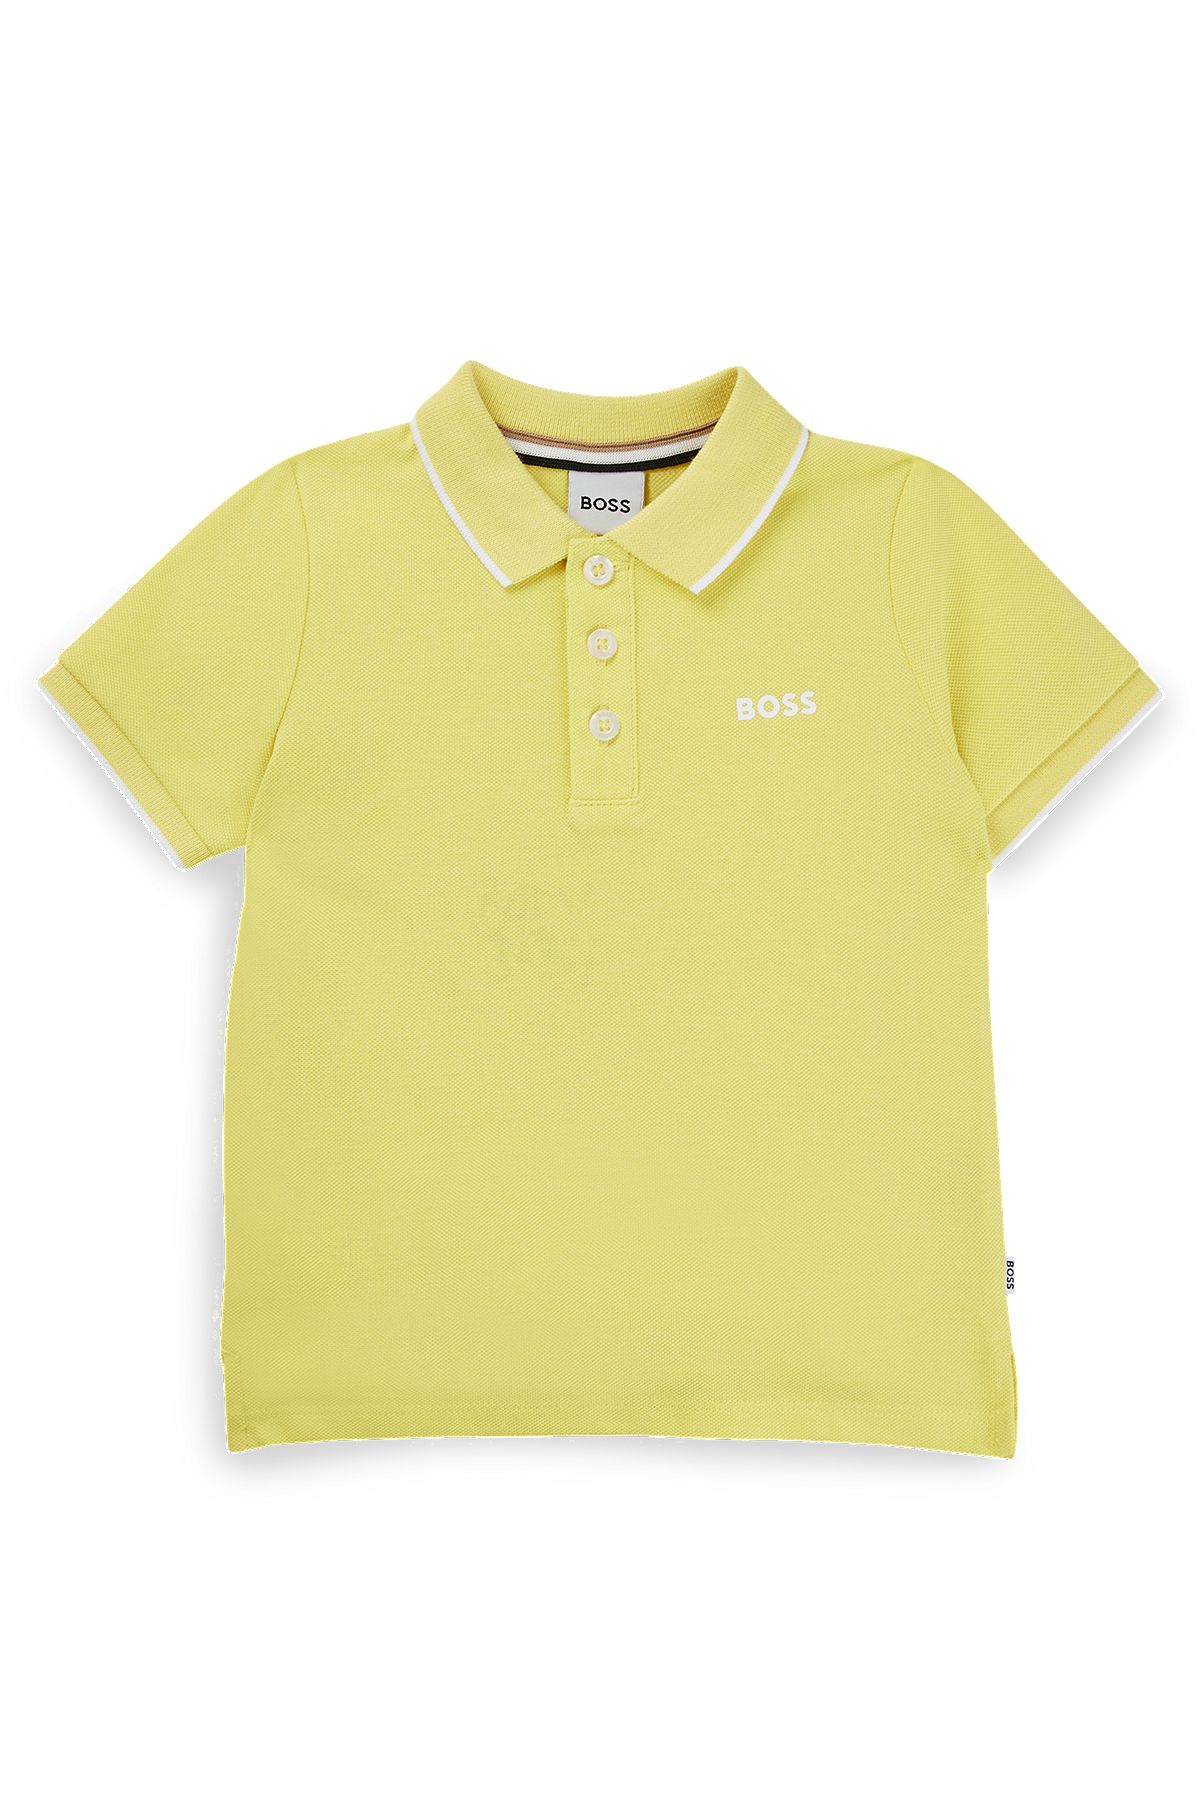 Kids' cotton-piqué polo shirt with logo and stripes, Yellow